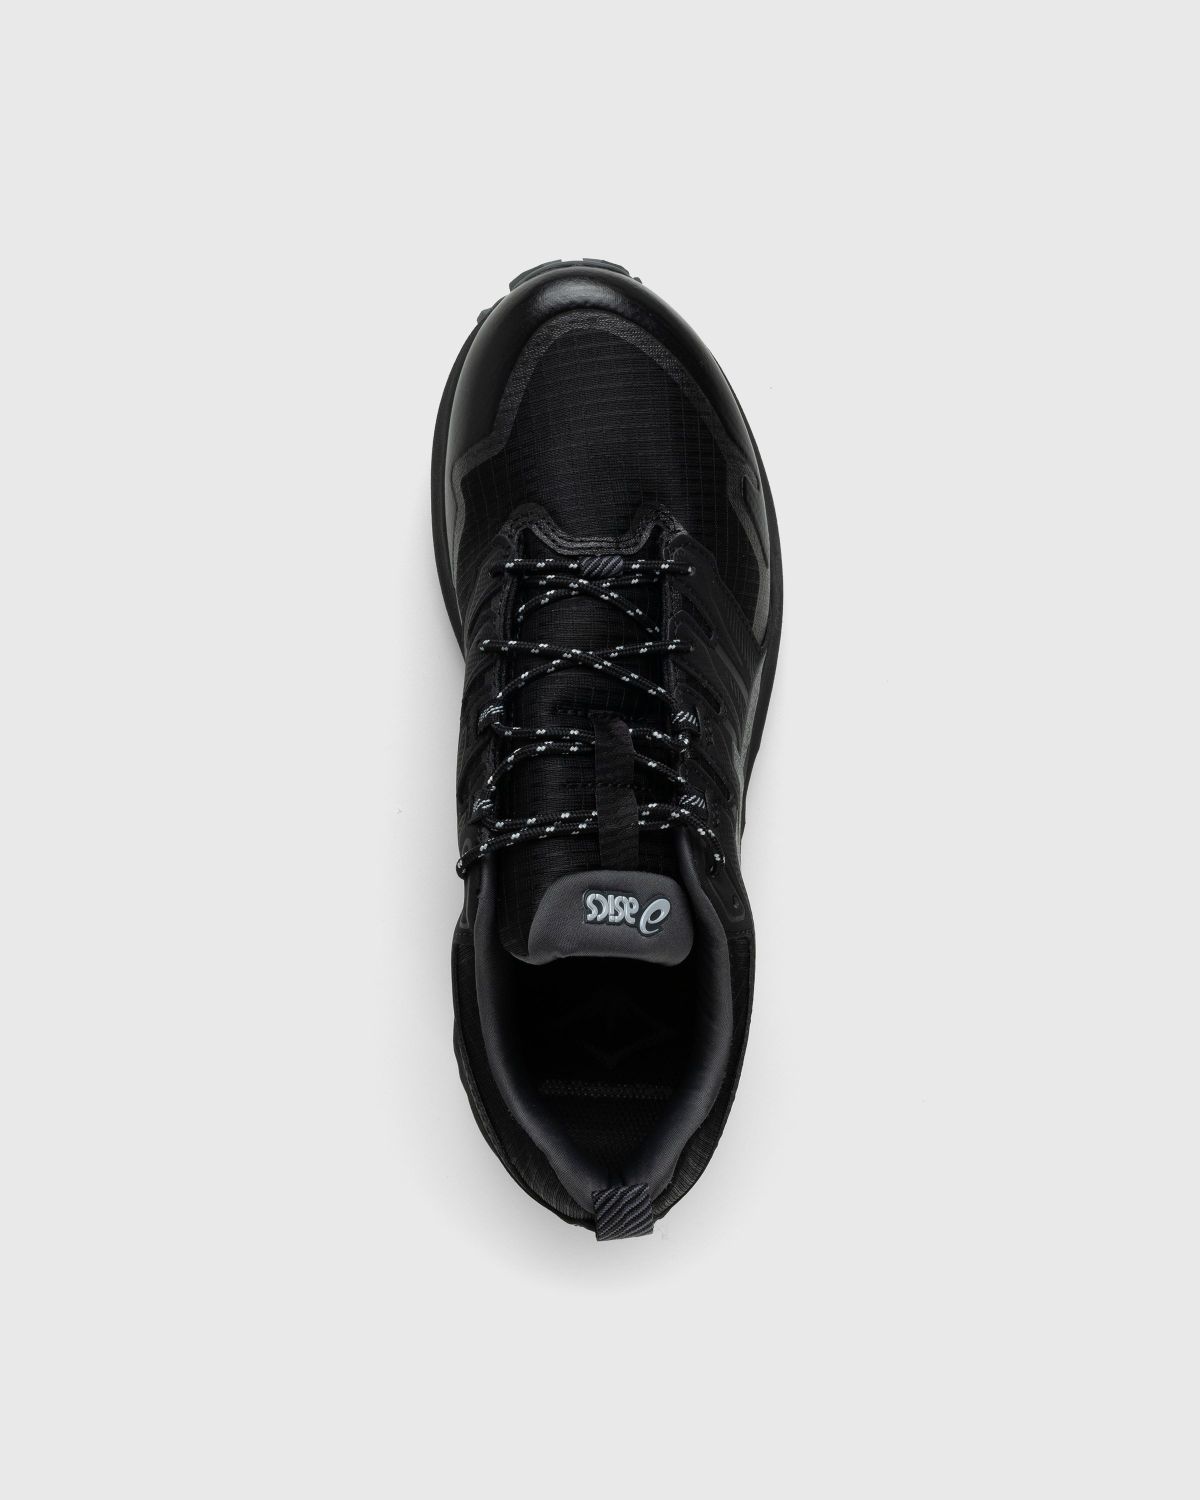 asics – GEL-TRABUCO TERRA SPS Black - Sneakers - Black - Image 5